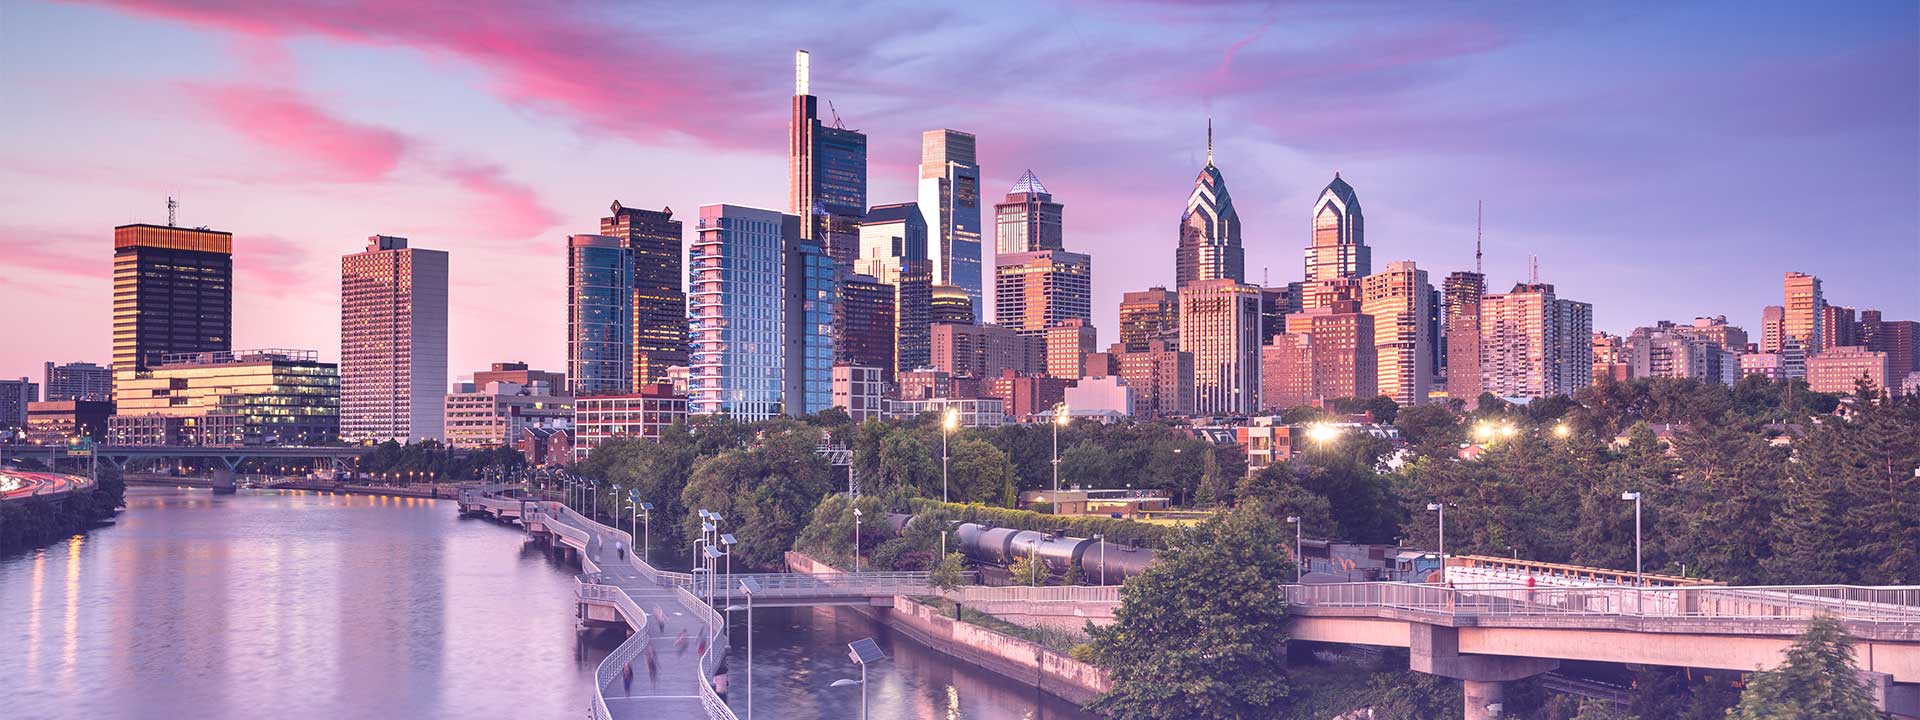 Pennsylvania city skyline of Philadelphia for travel healthcare professionals